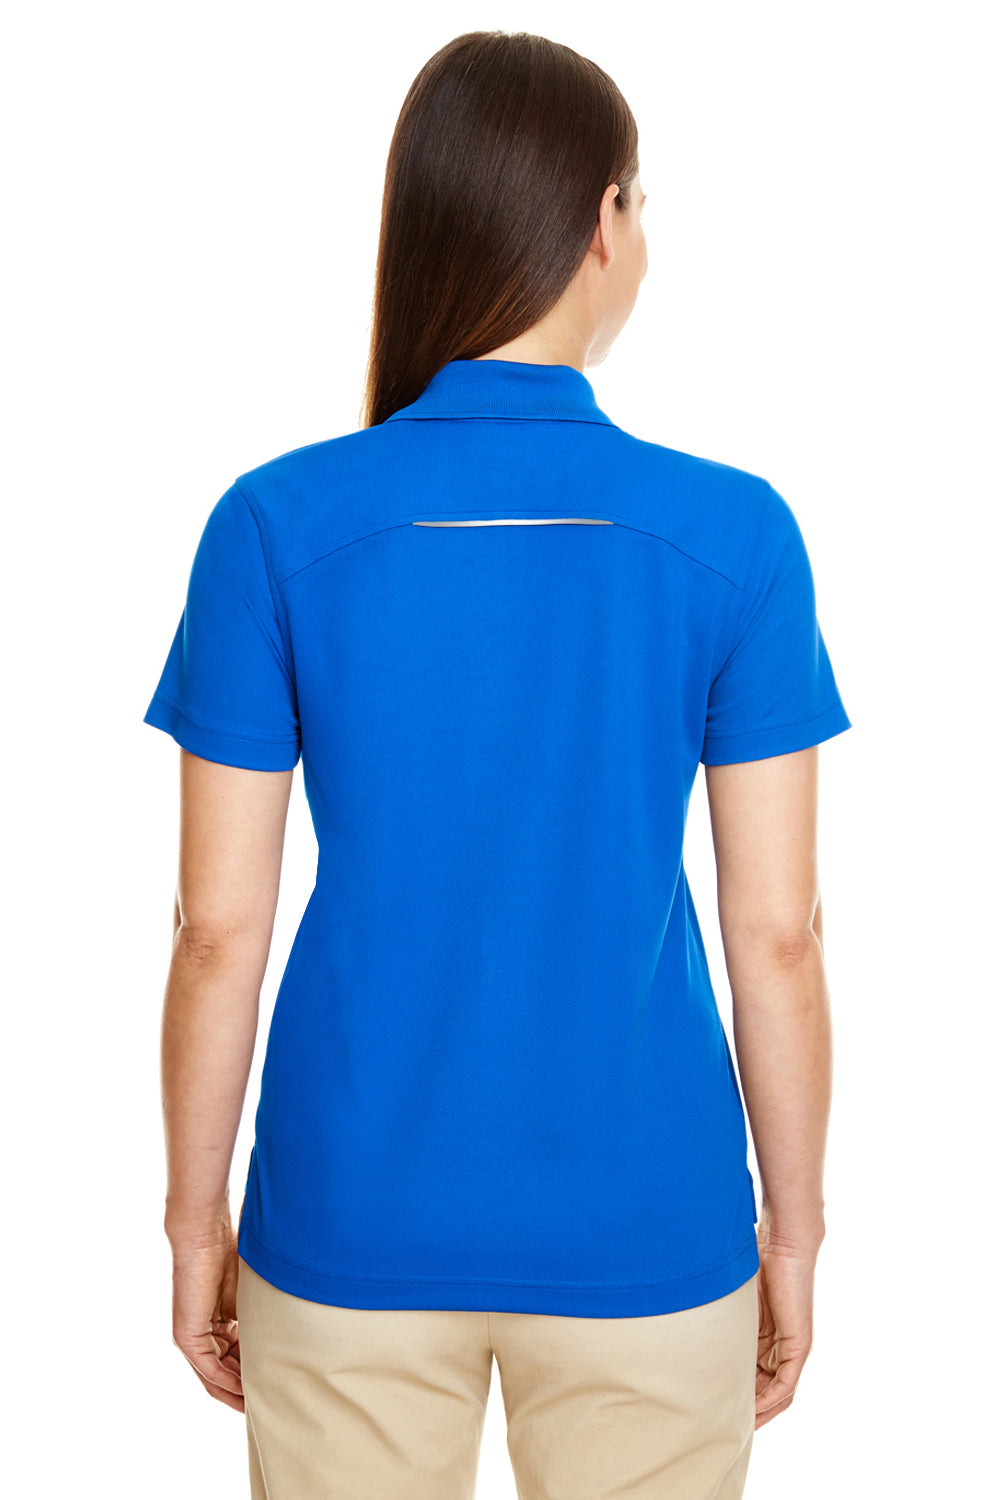 Core 365 78181R Womens Radiant Performance Moisture Wicking Short Sleeve Polo Shirt Royal Blue Back